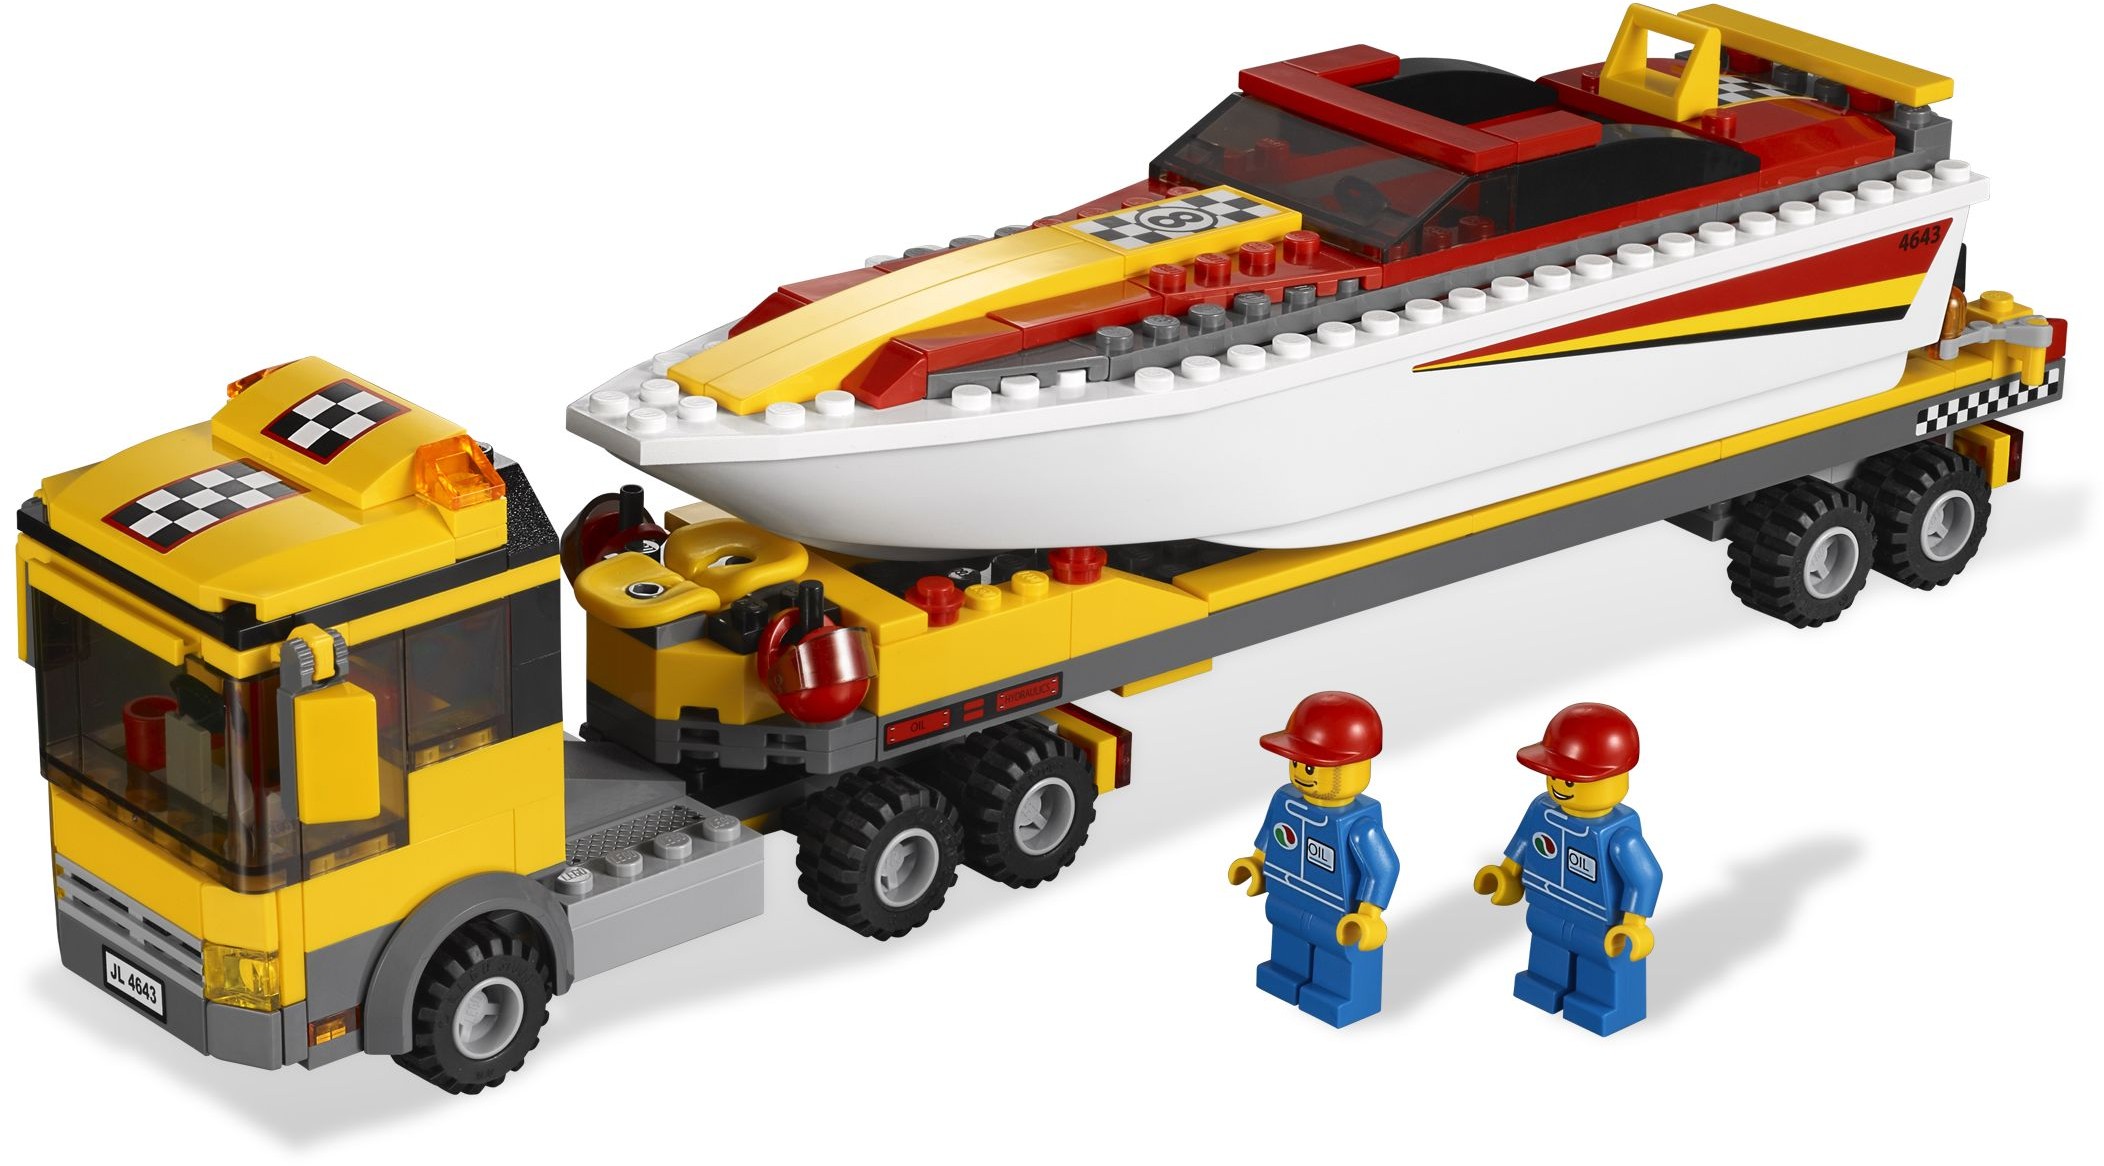 LEGO 2K Drive City sets revealed! - Jay's Brick Blog